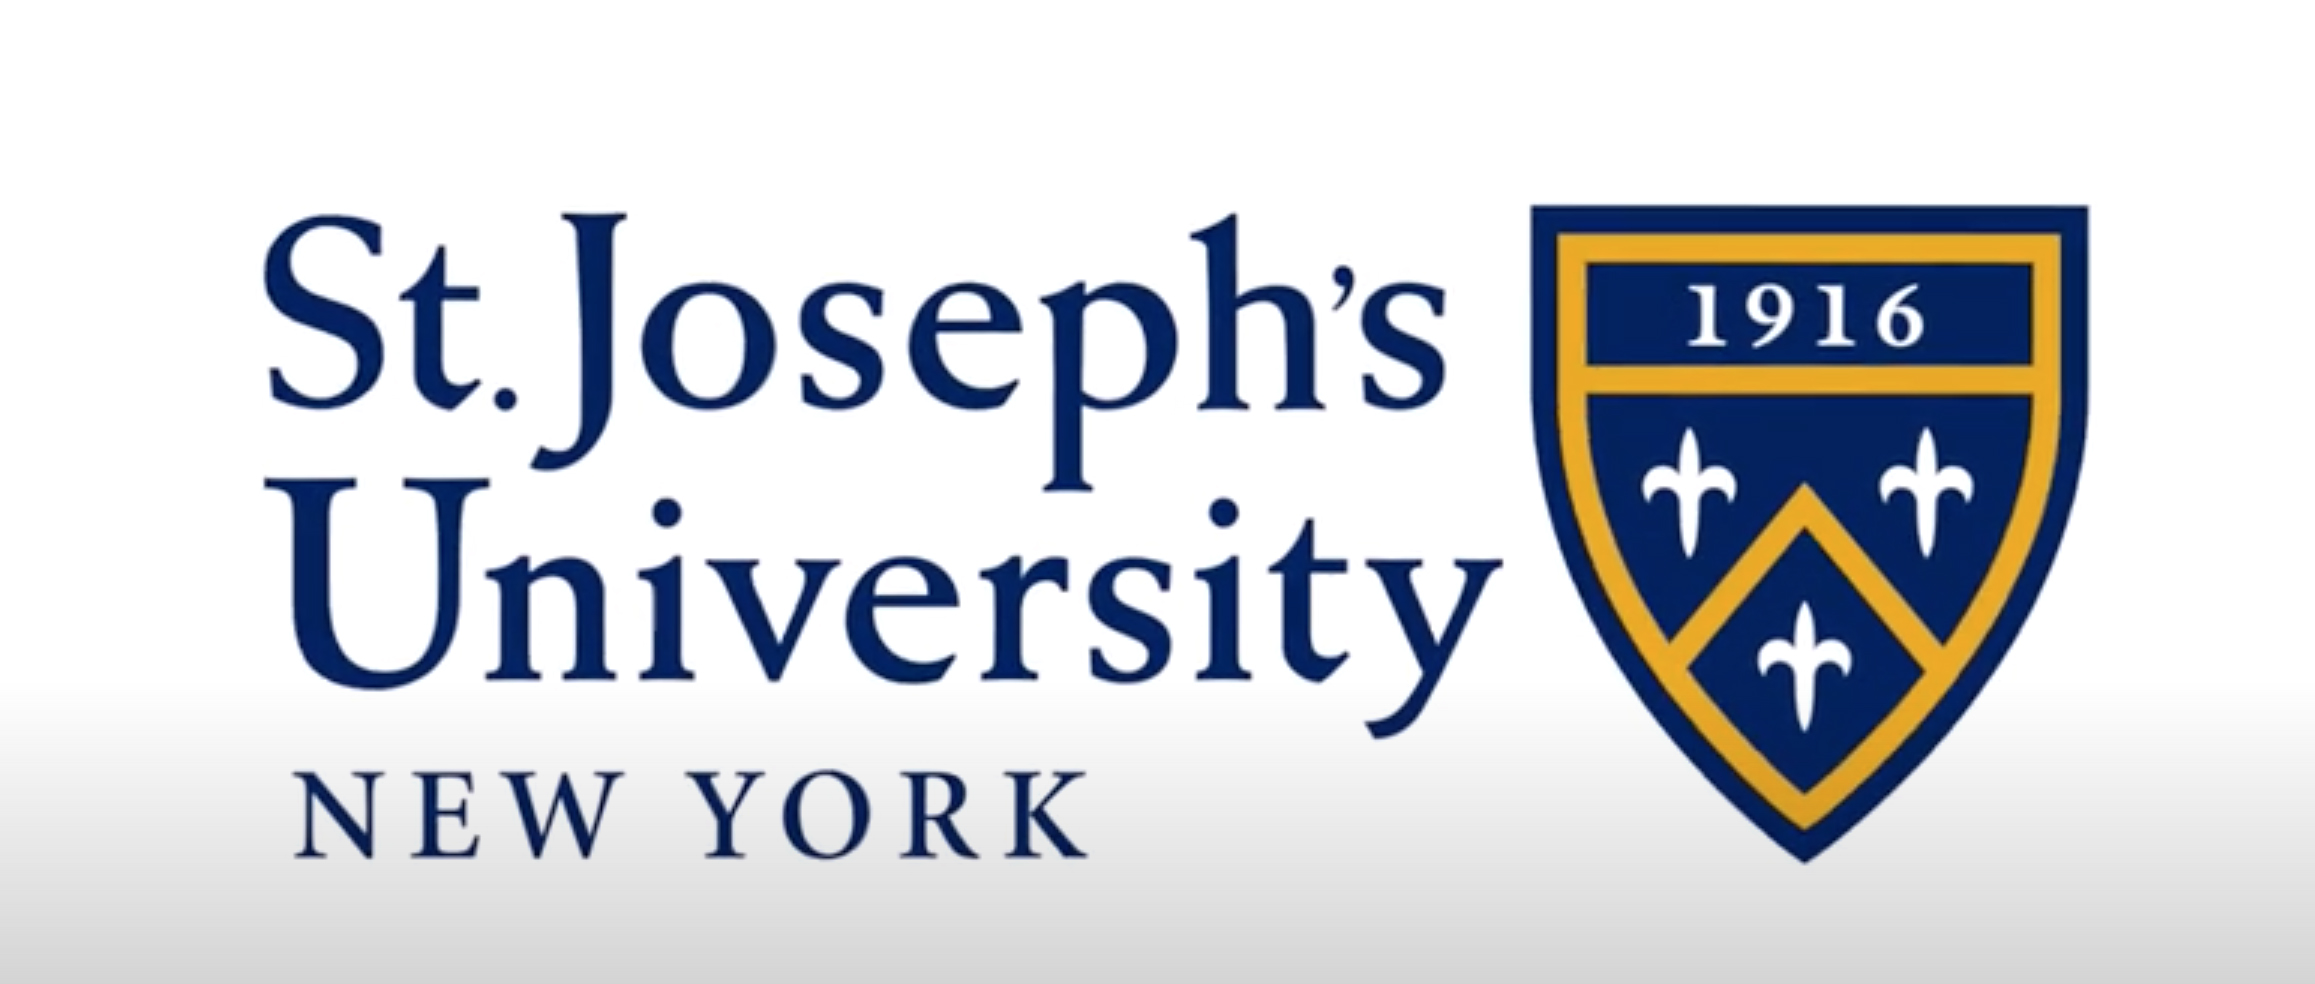 St. Josephs University moves up 30 ranks in best colleges